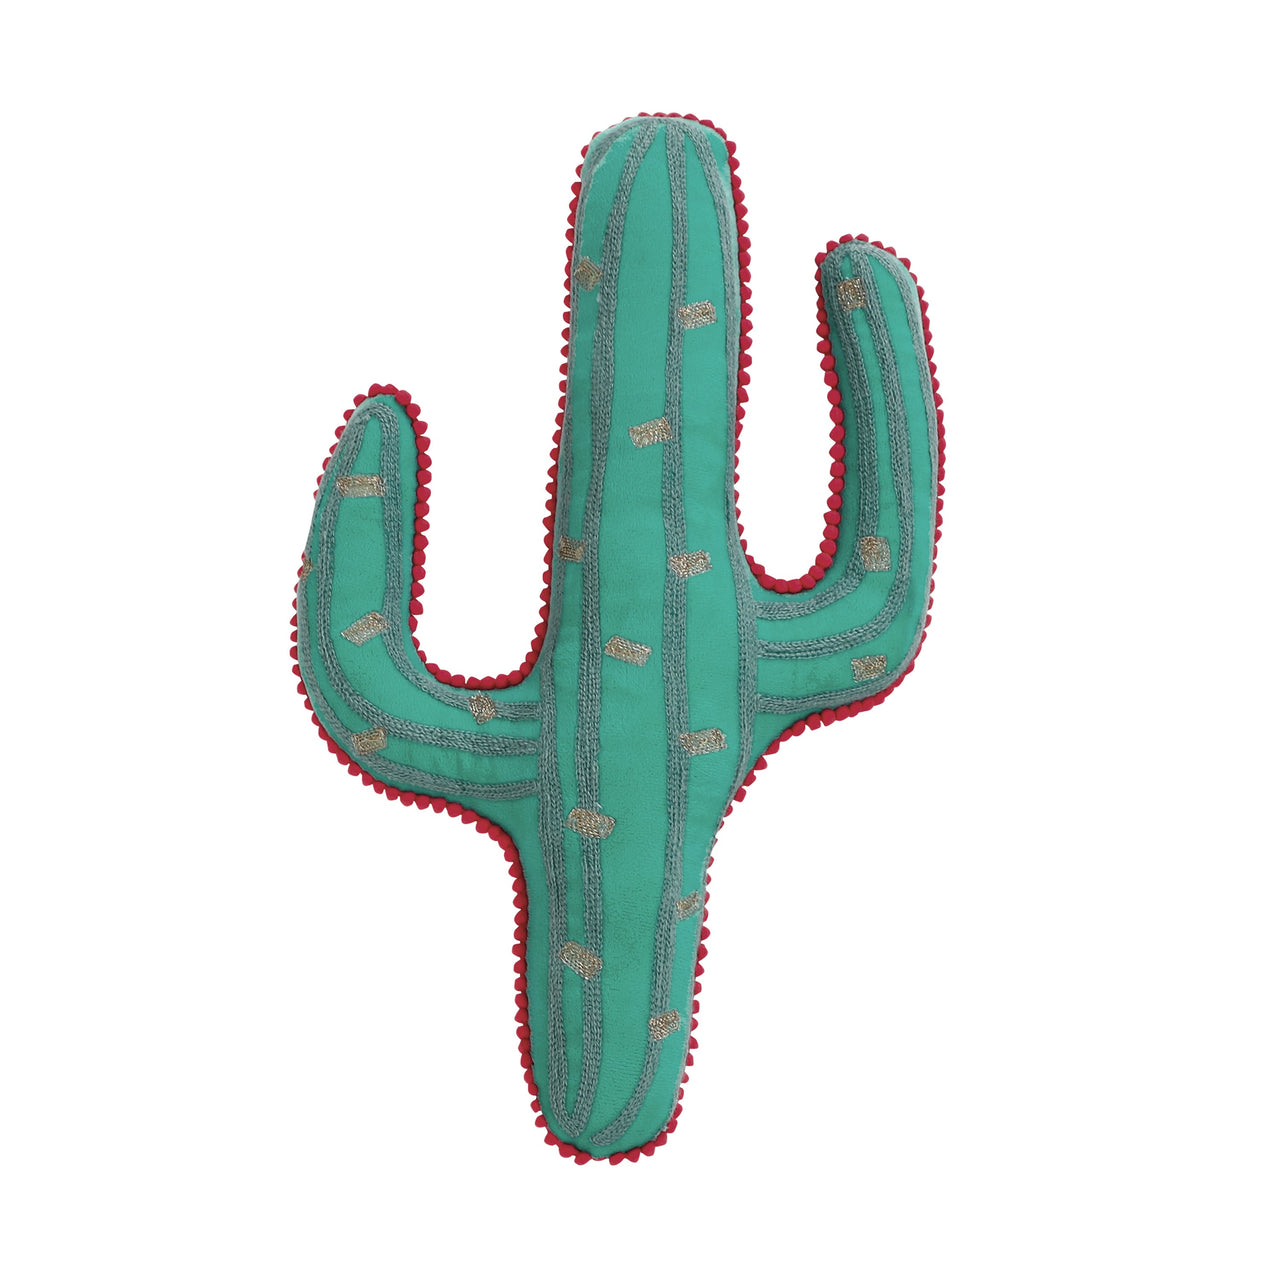 Lima Llama Shaped Cactus Pillow